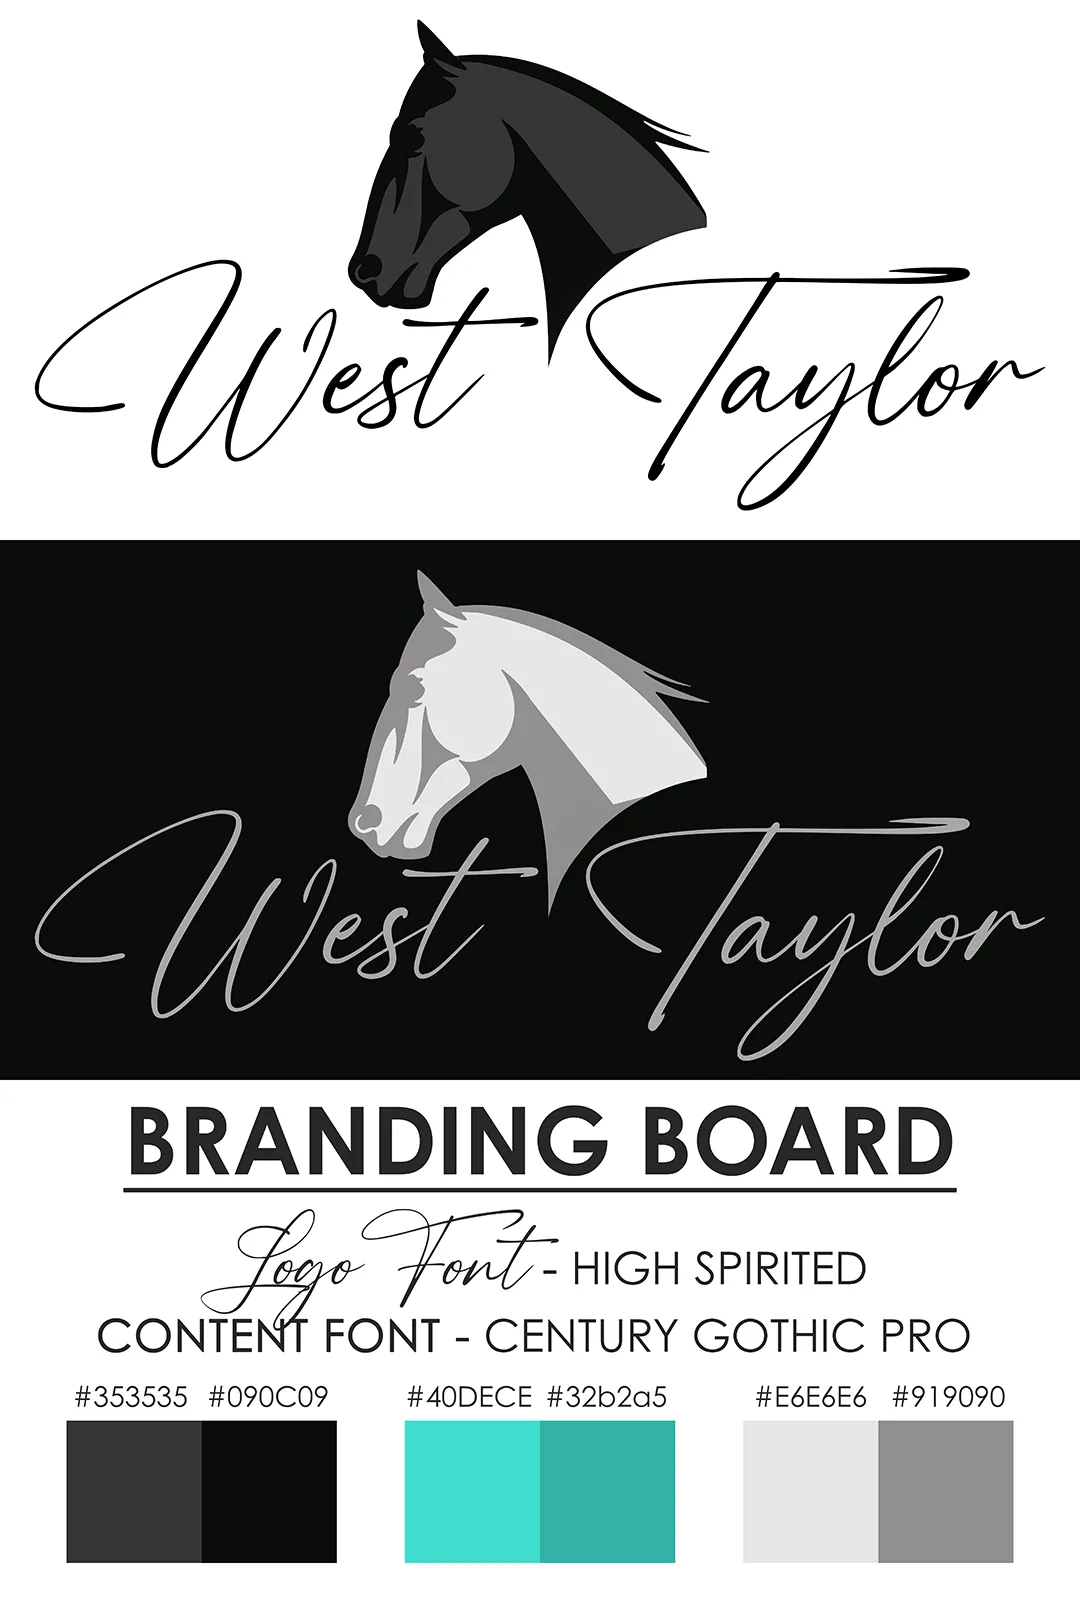 Copy of West Taylor - Branding Board copy